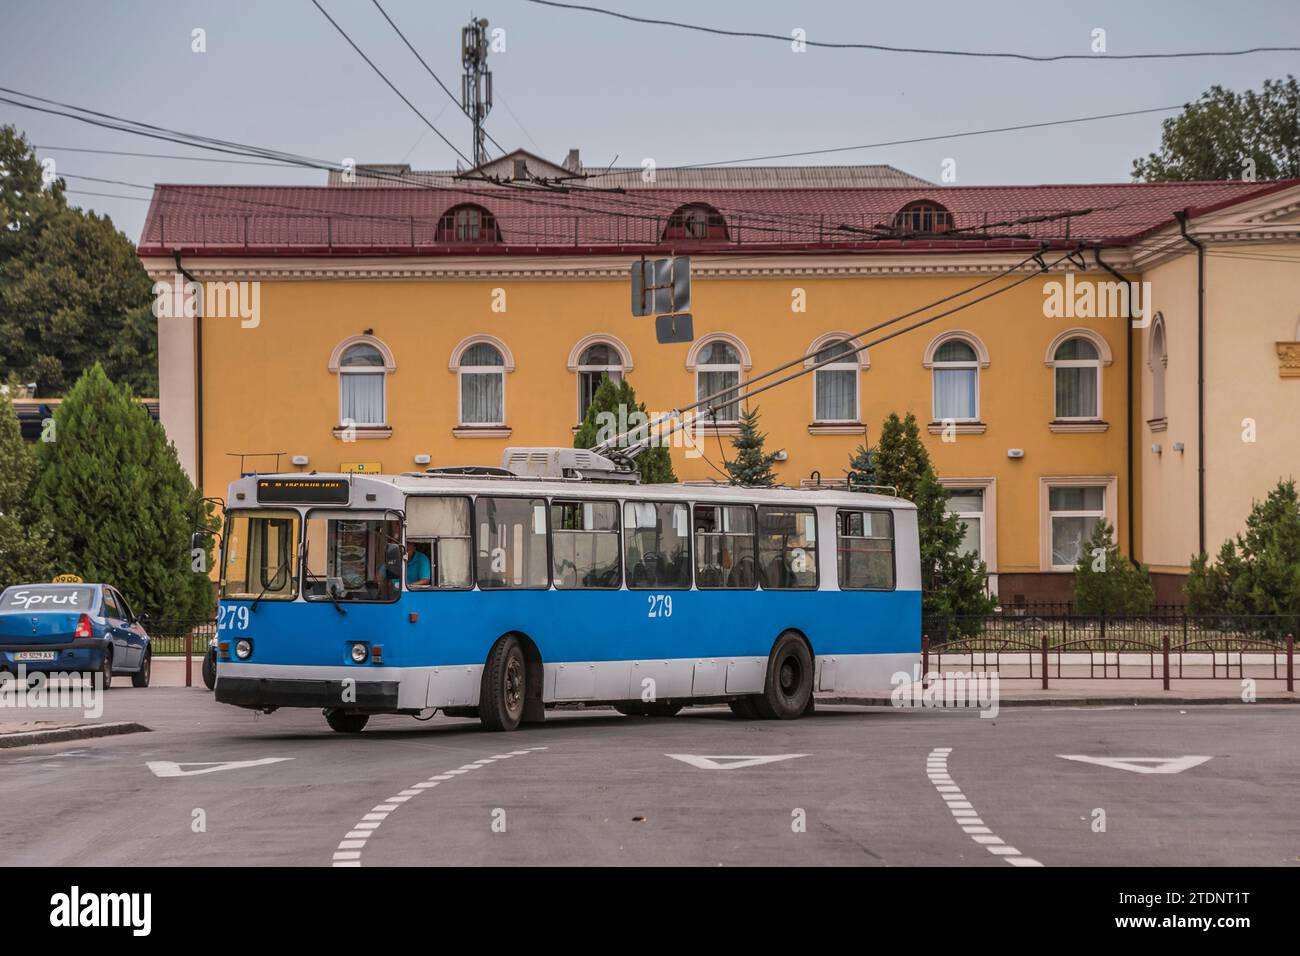 17.08.2021. Ukraine, Vinnytsia. Urban electric transport - tram and trolleybus. Stock Photo